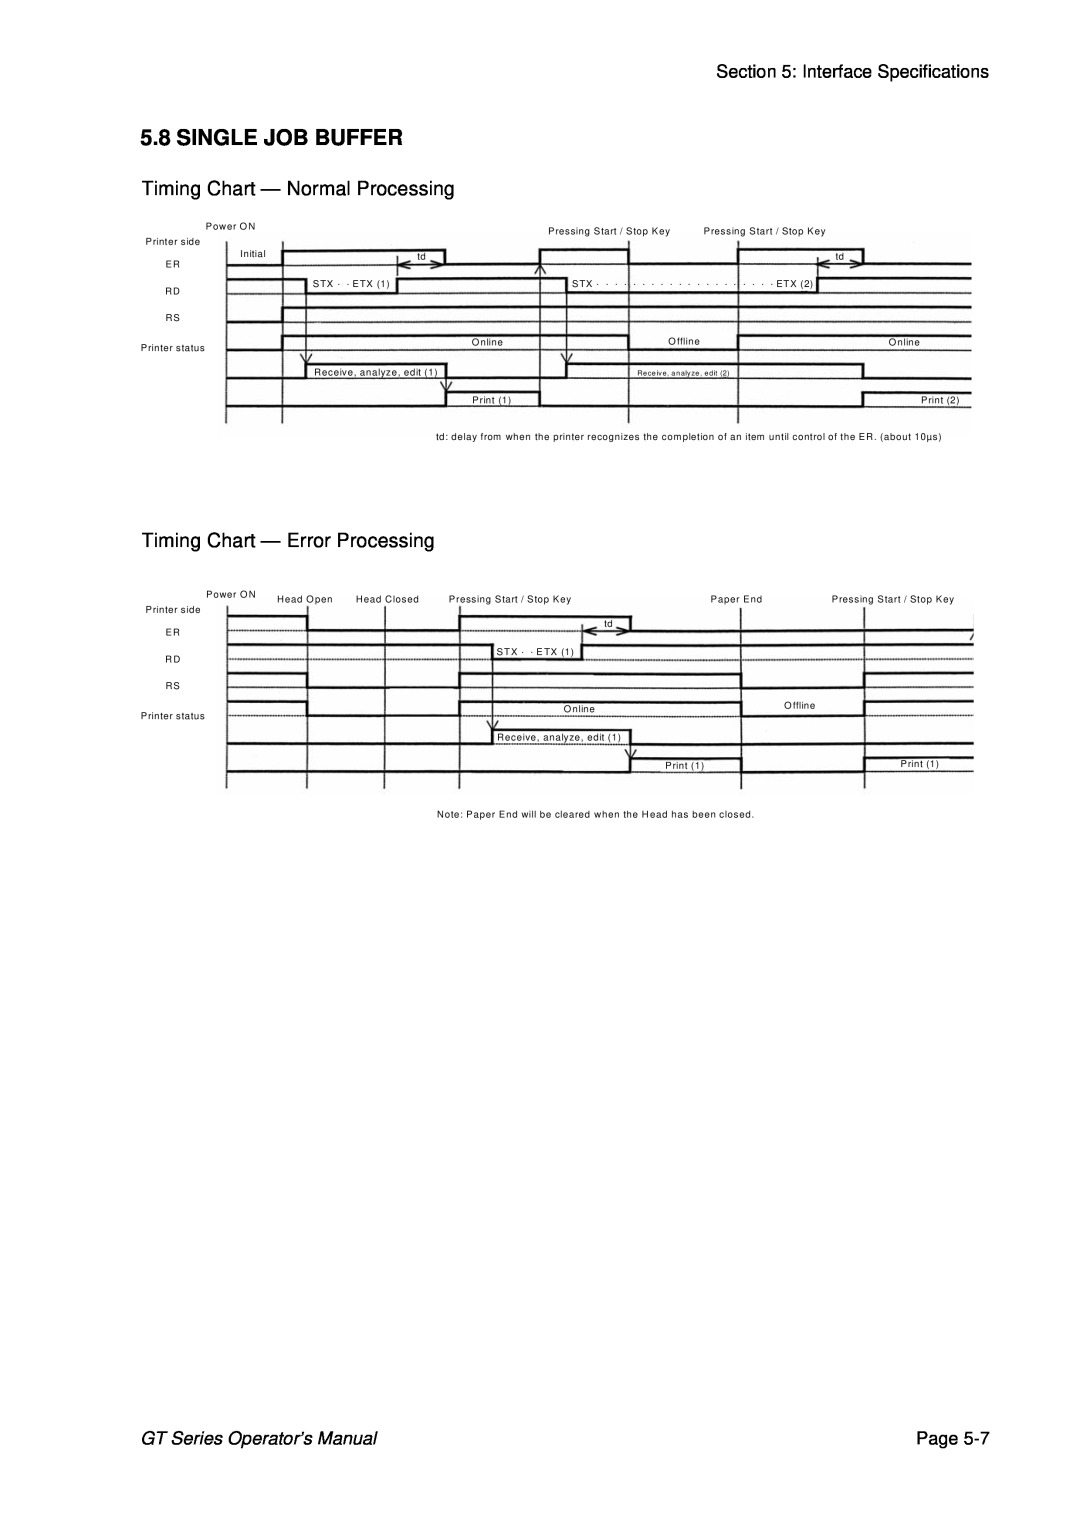 SATO GT424 manual Single Job Buffer, Timing Chart - Normal Processing, Timing Chart - Error Processing, Page 